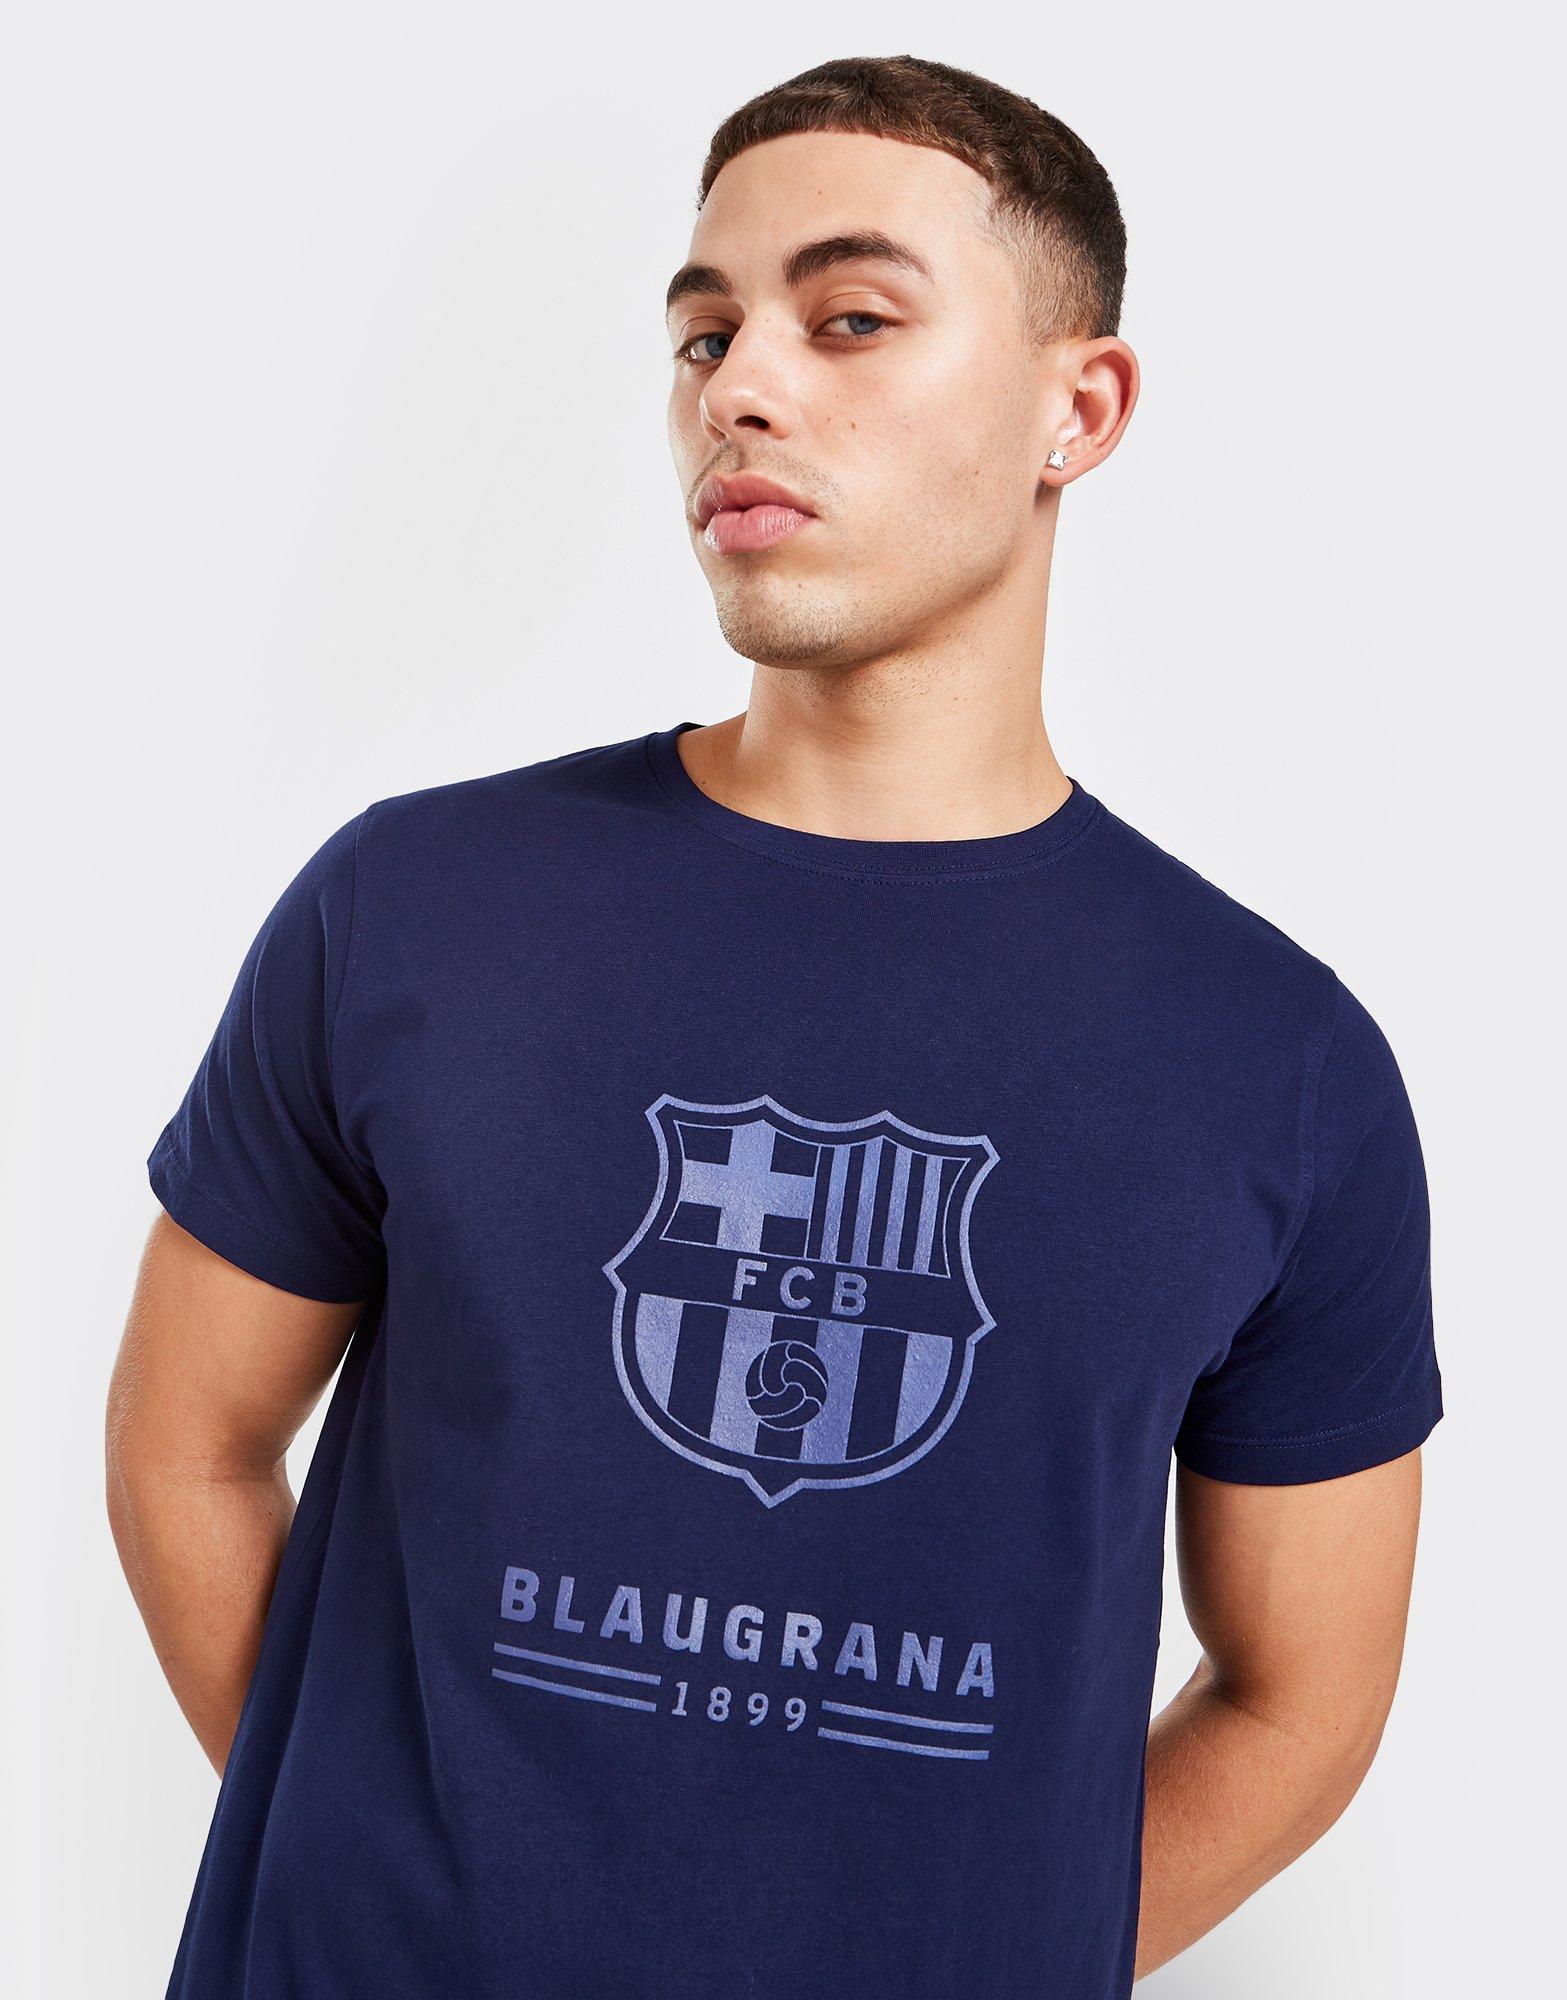 Official Team camiseta FC Barcelona Blaugrana en JD Sports España